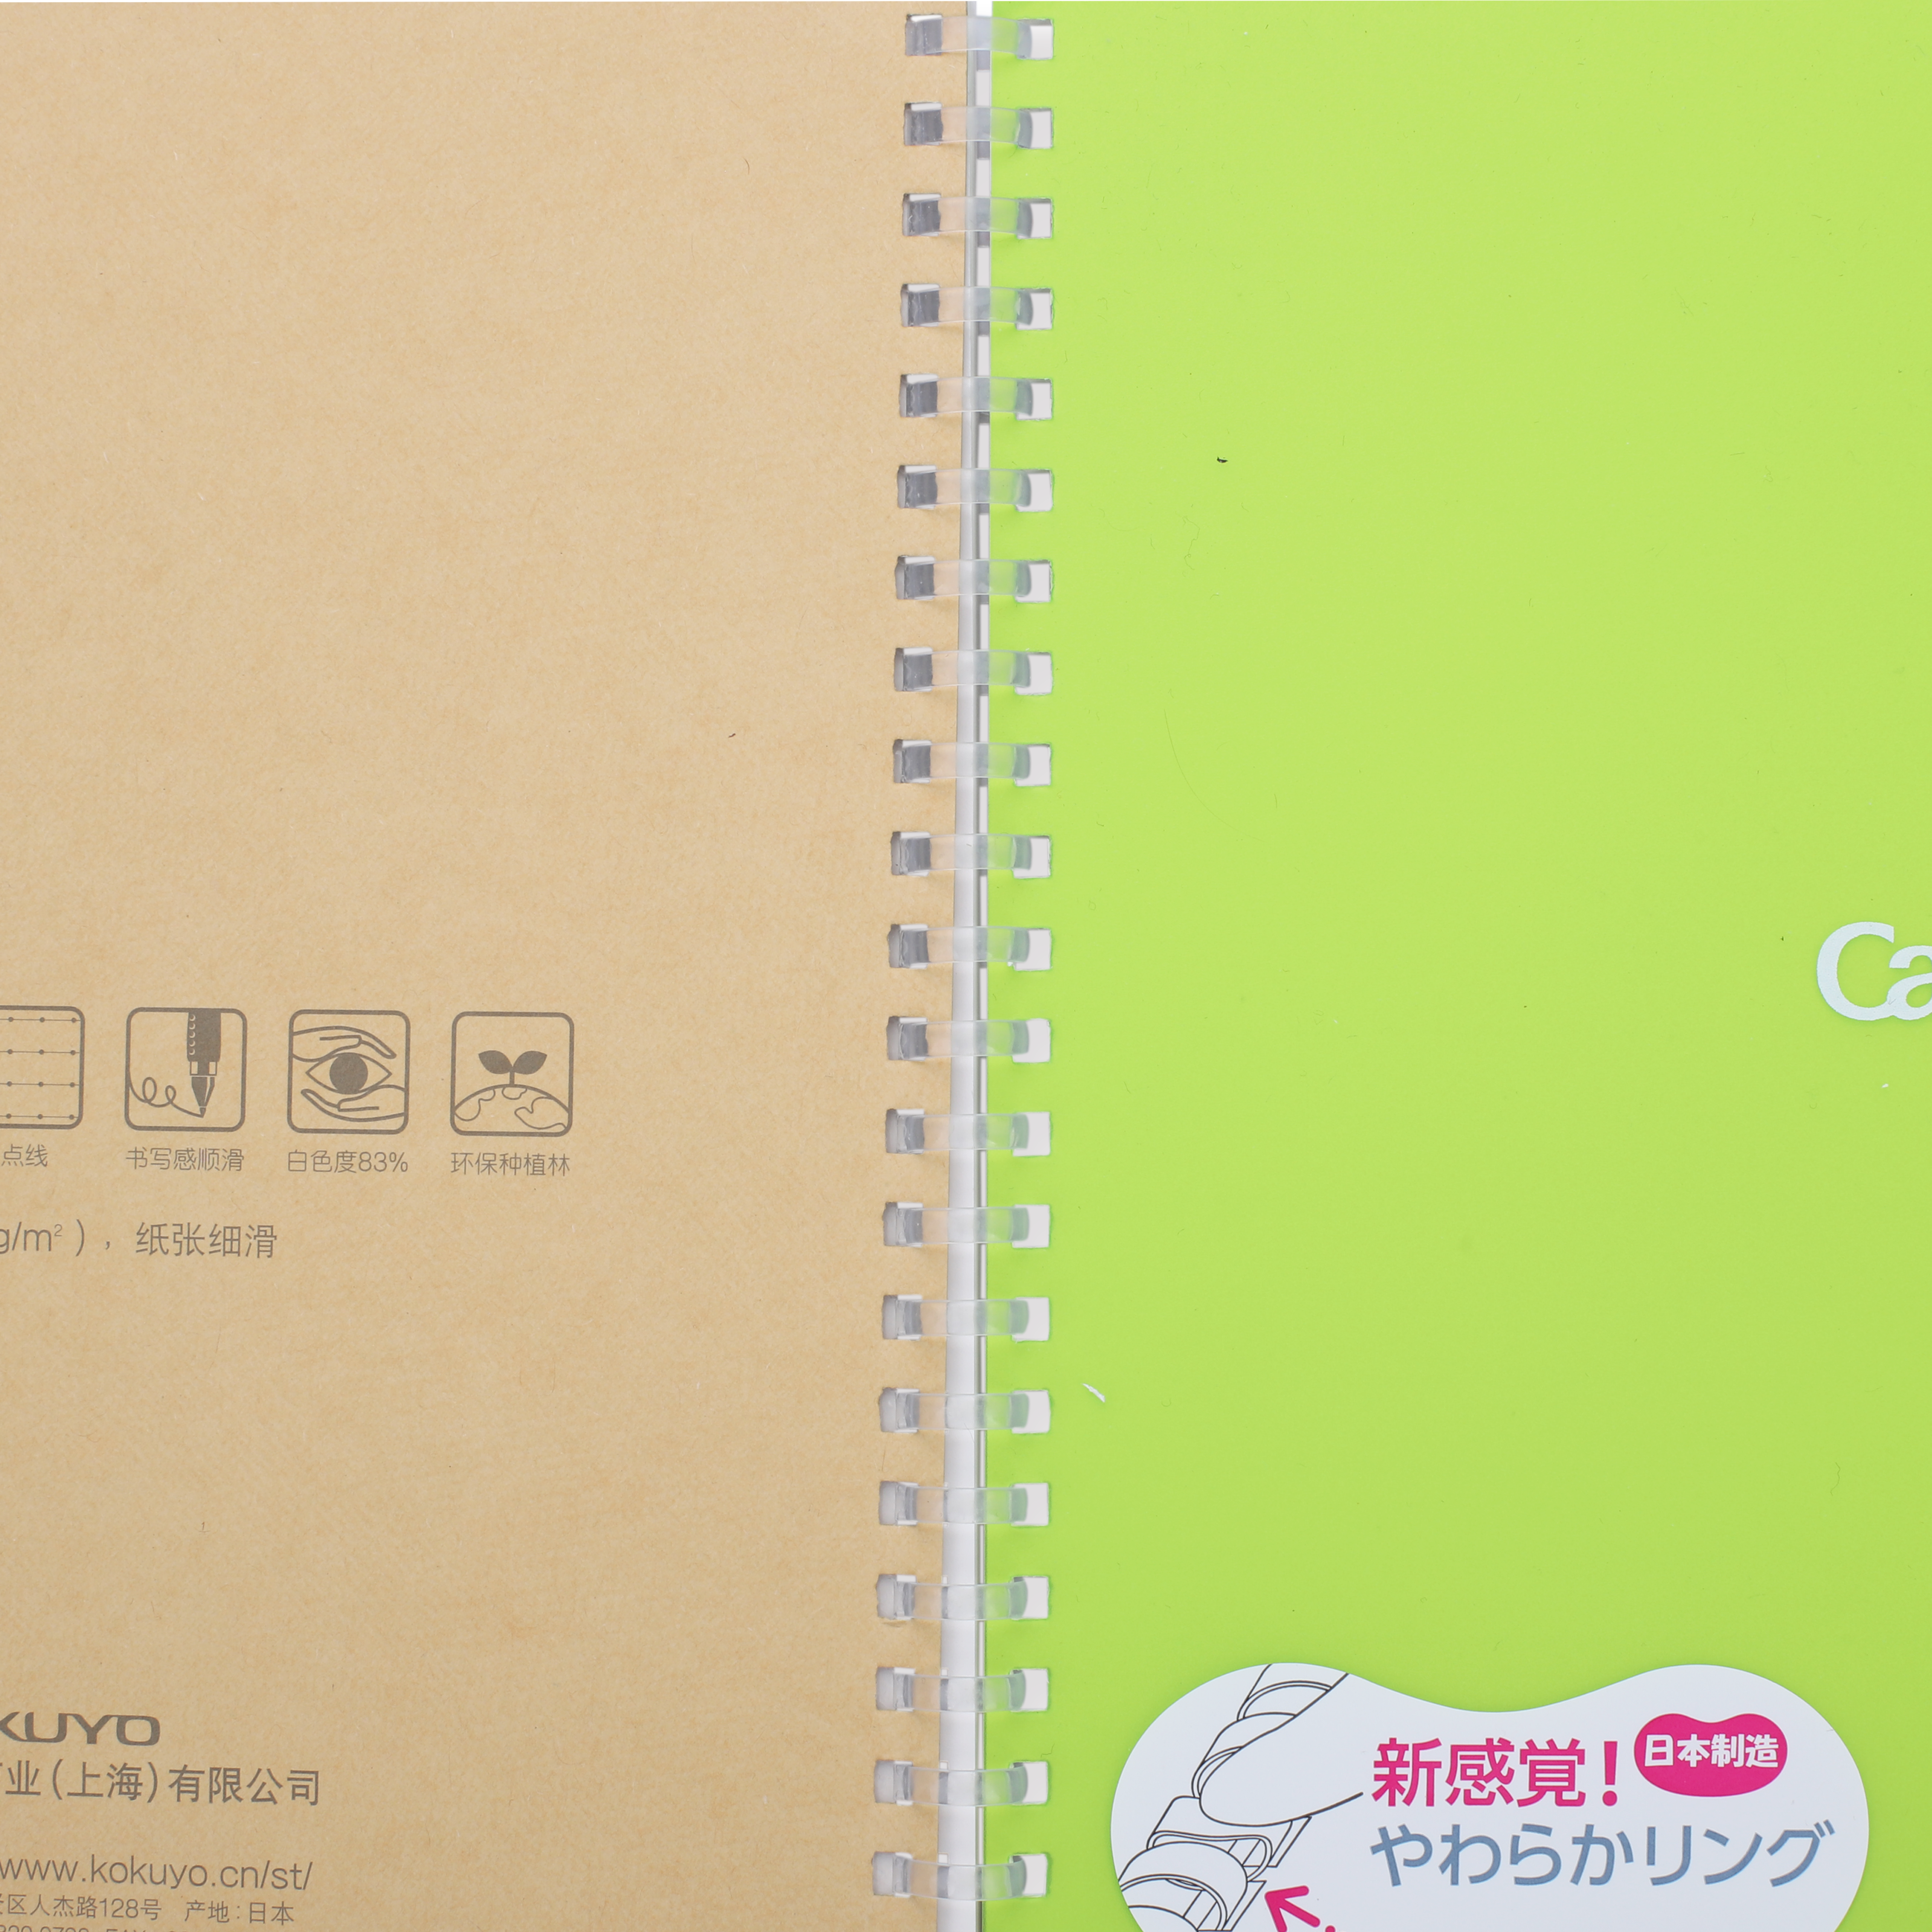 Kokuyo Campus Soft Ring Notizbuch - A5 - 8 mm liniert - Hellgrün